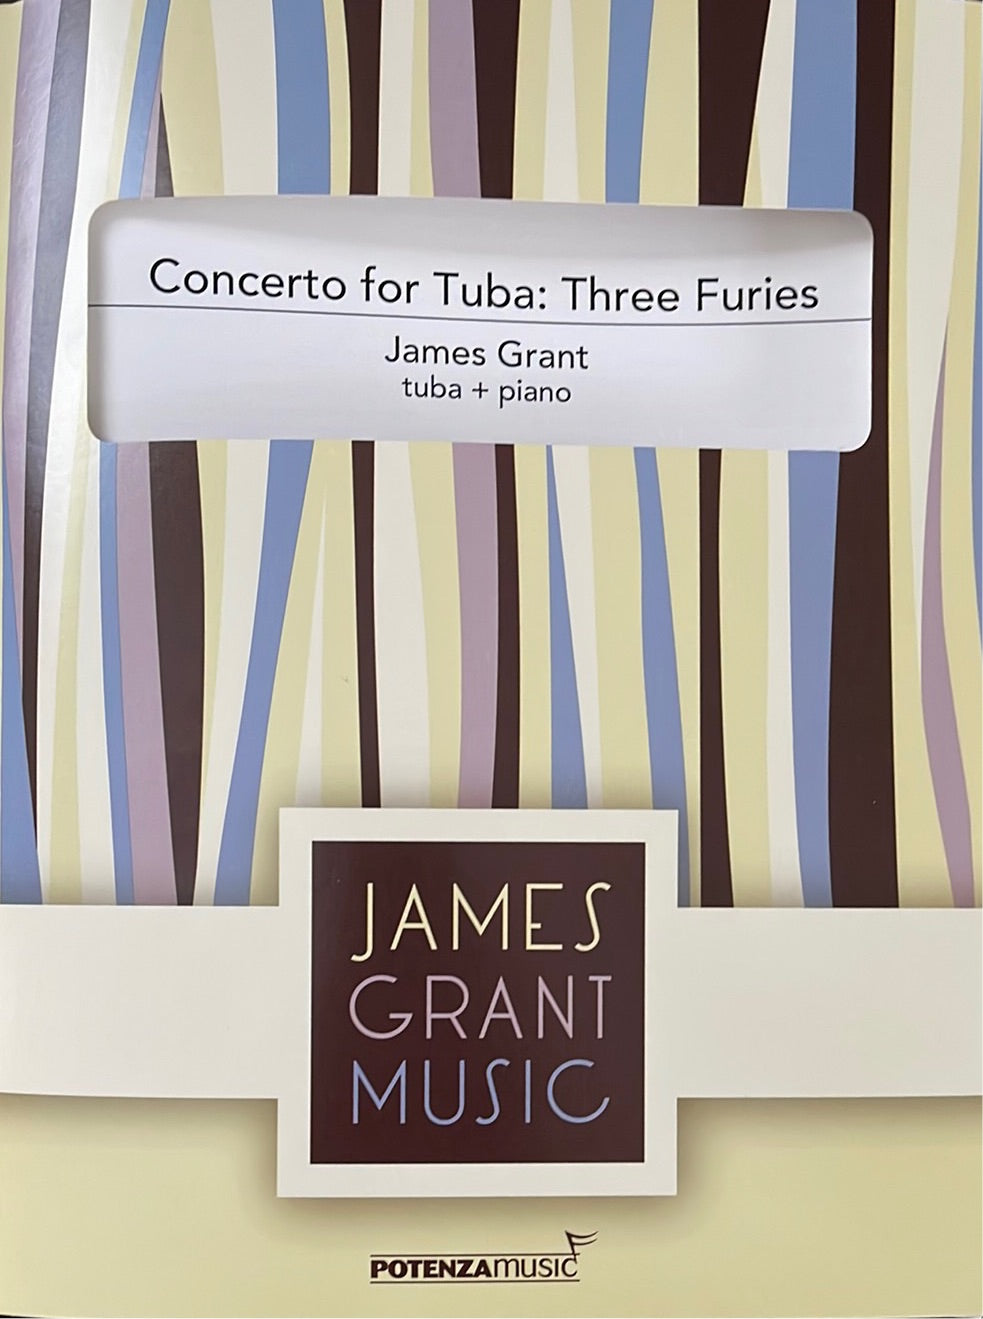 Grant - Concerto for Tuba: Three Furies